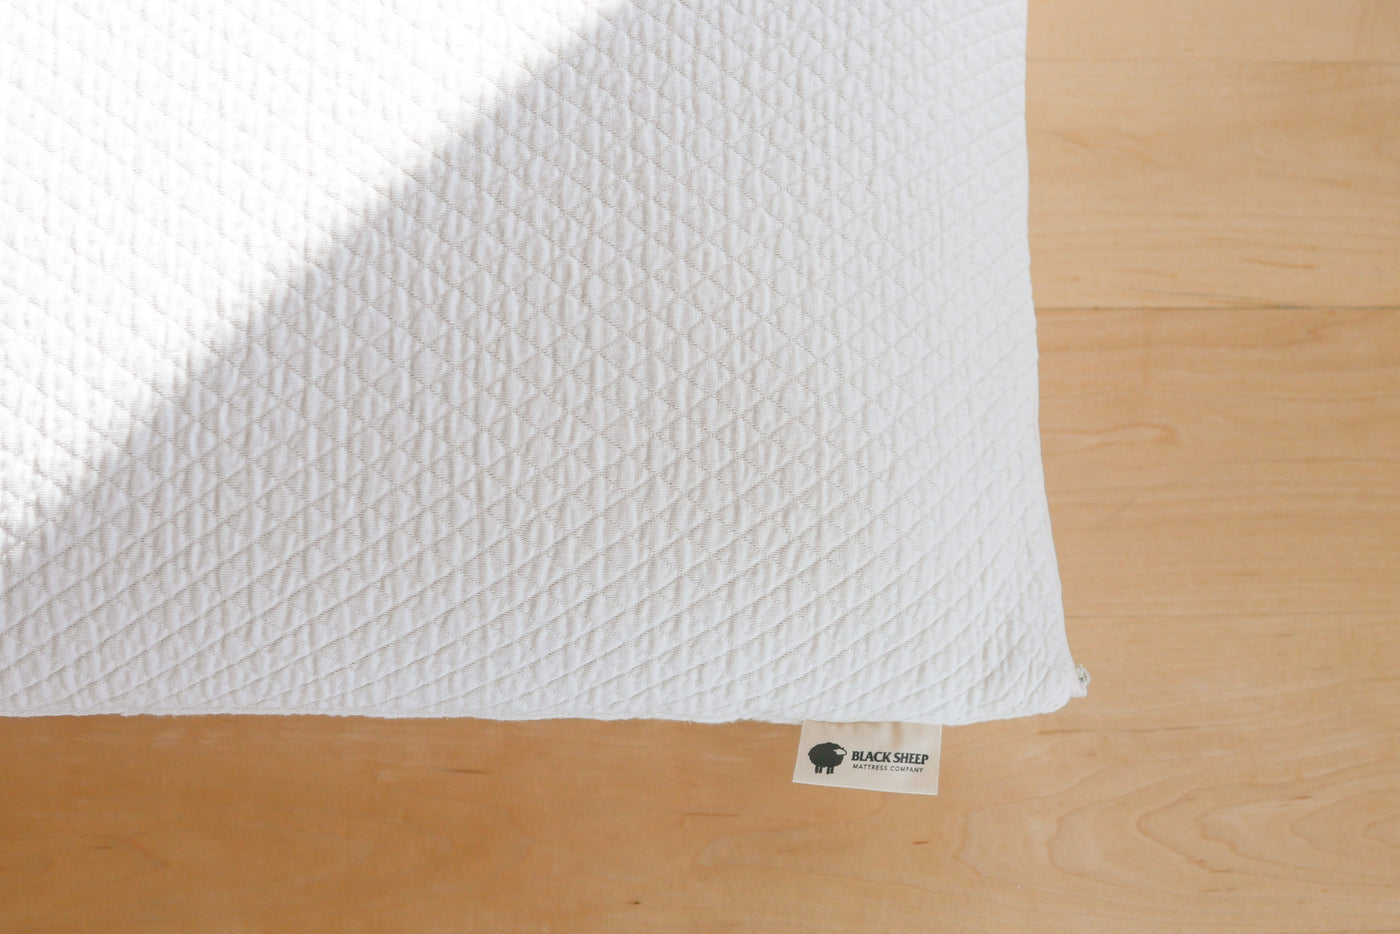 100% natural talalay latex pillows in organic cotton case